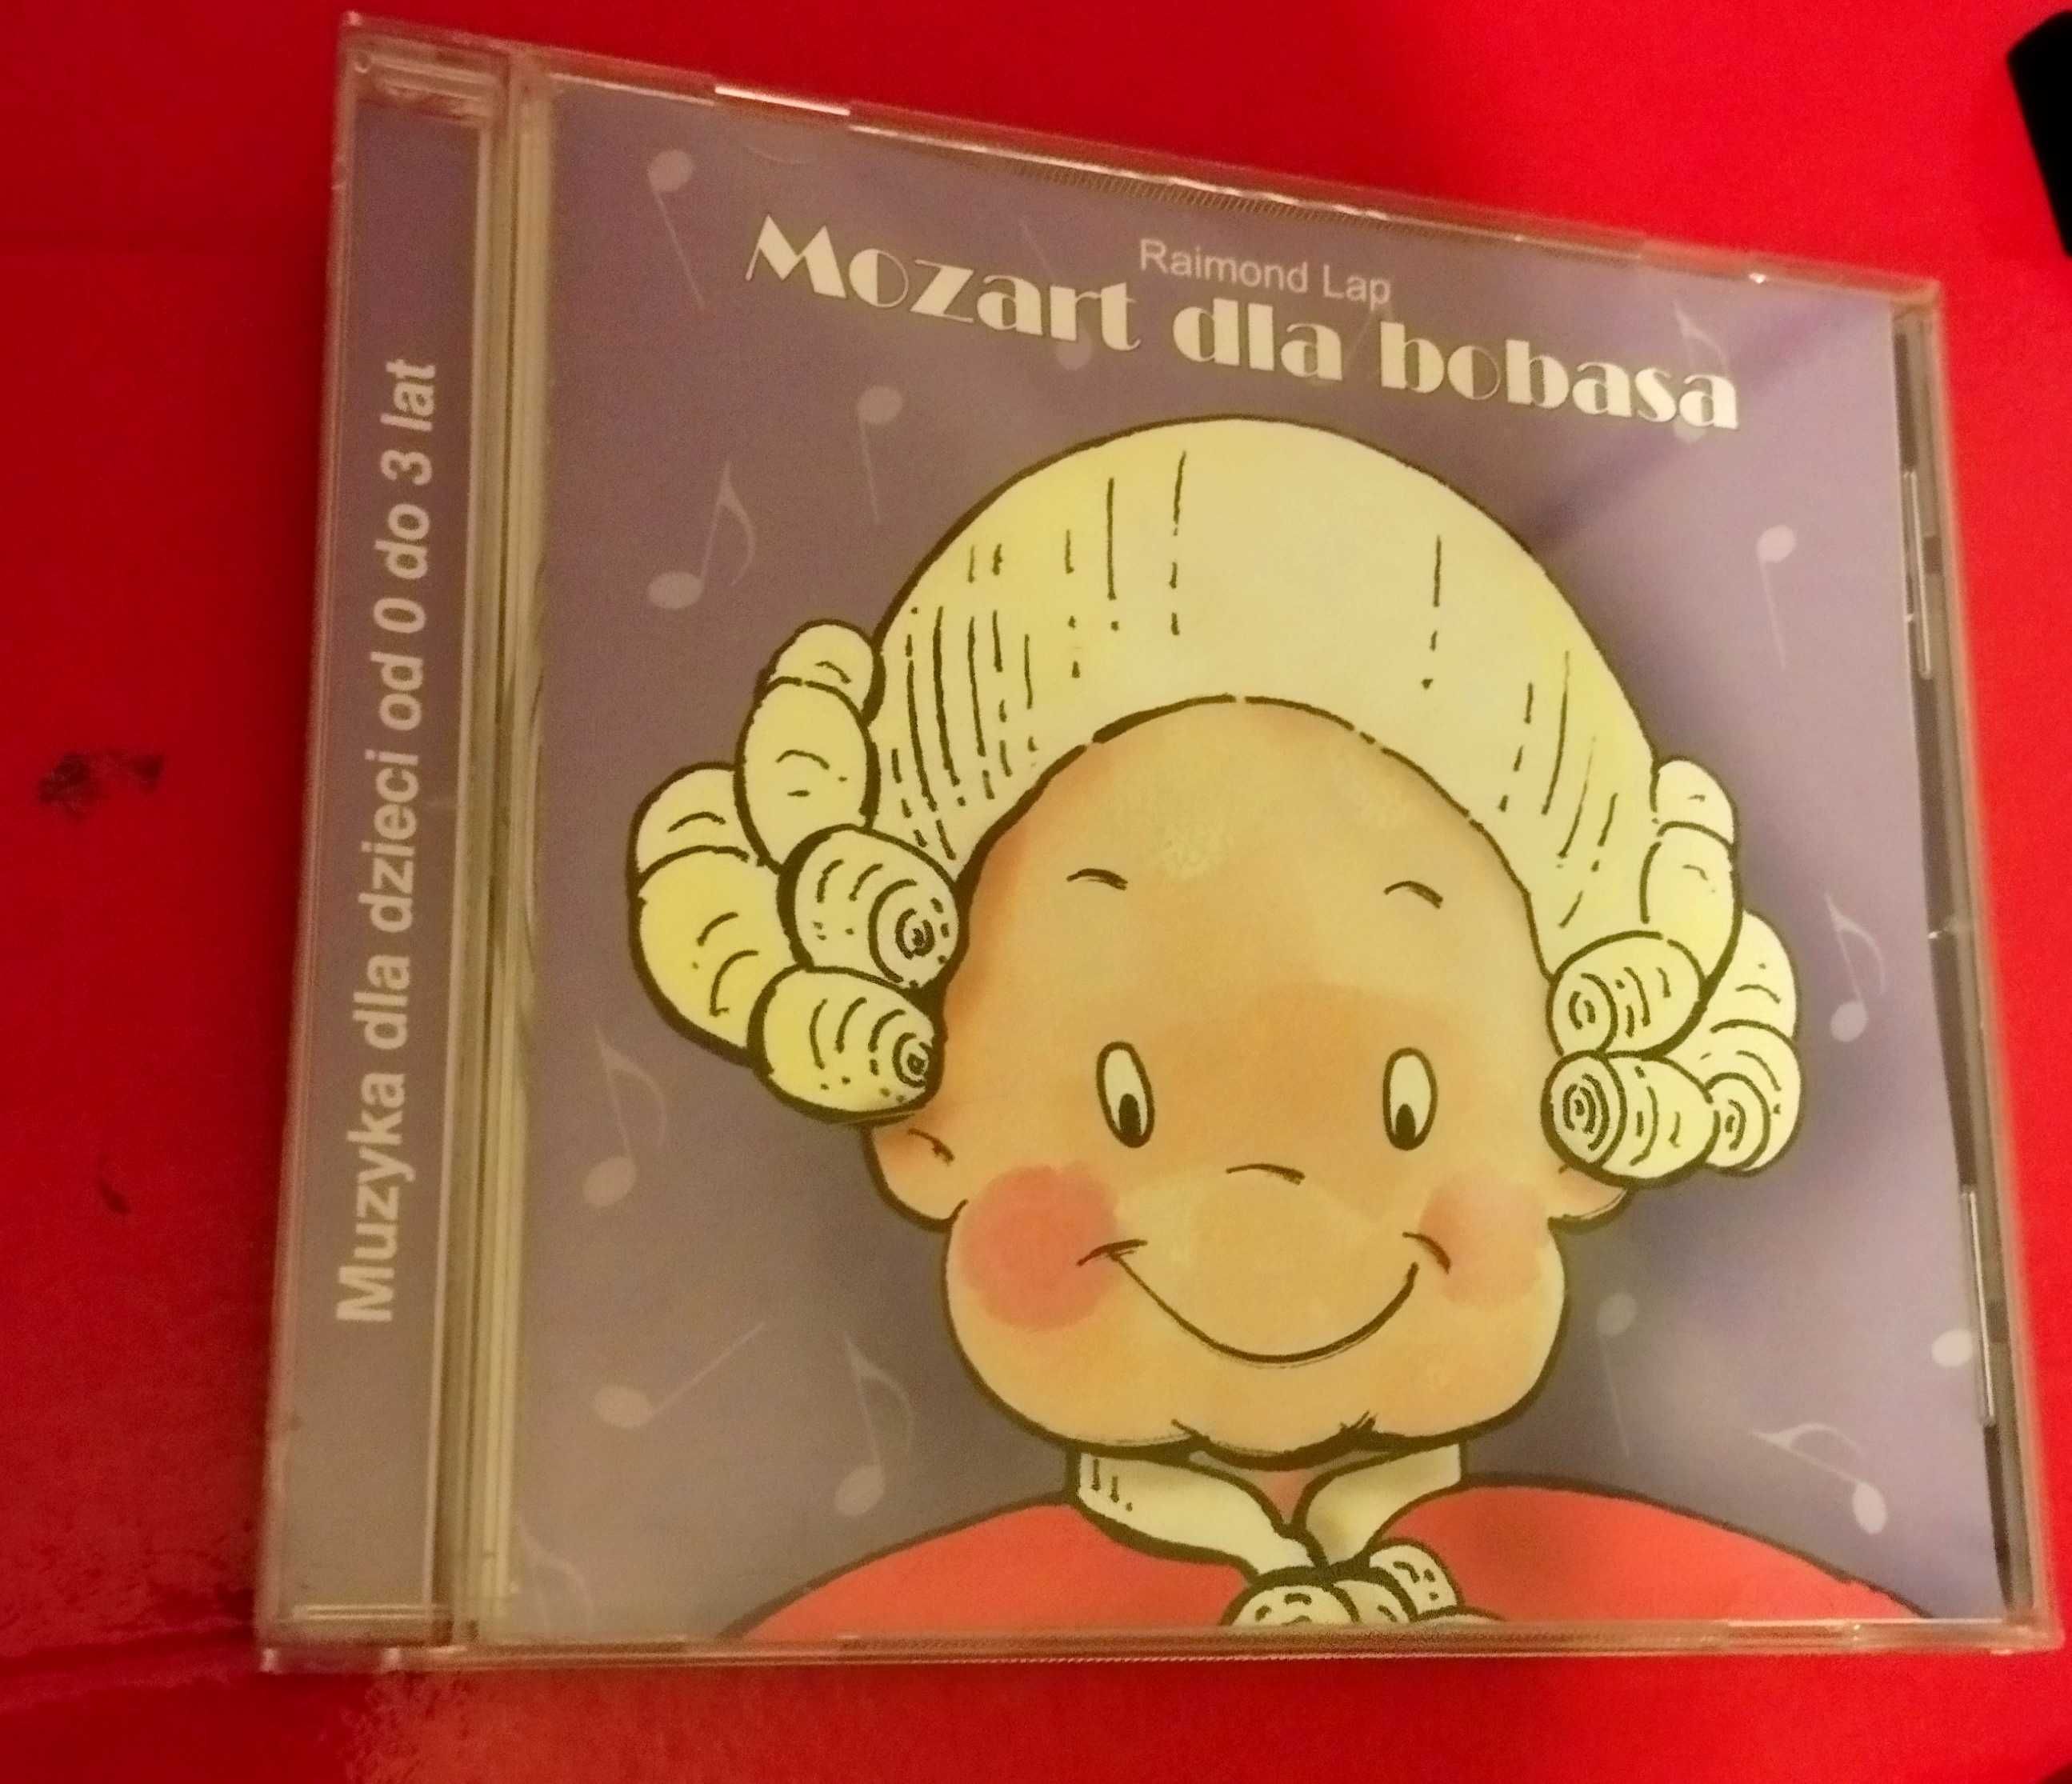 Mozart dla bobasa CD